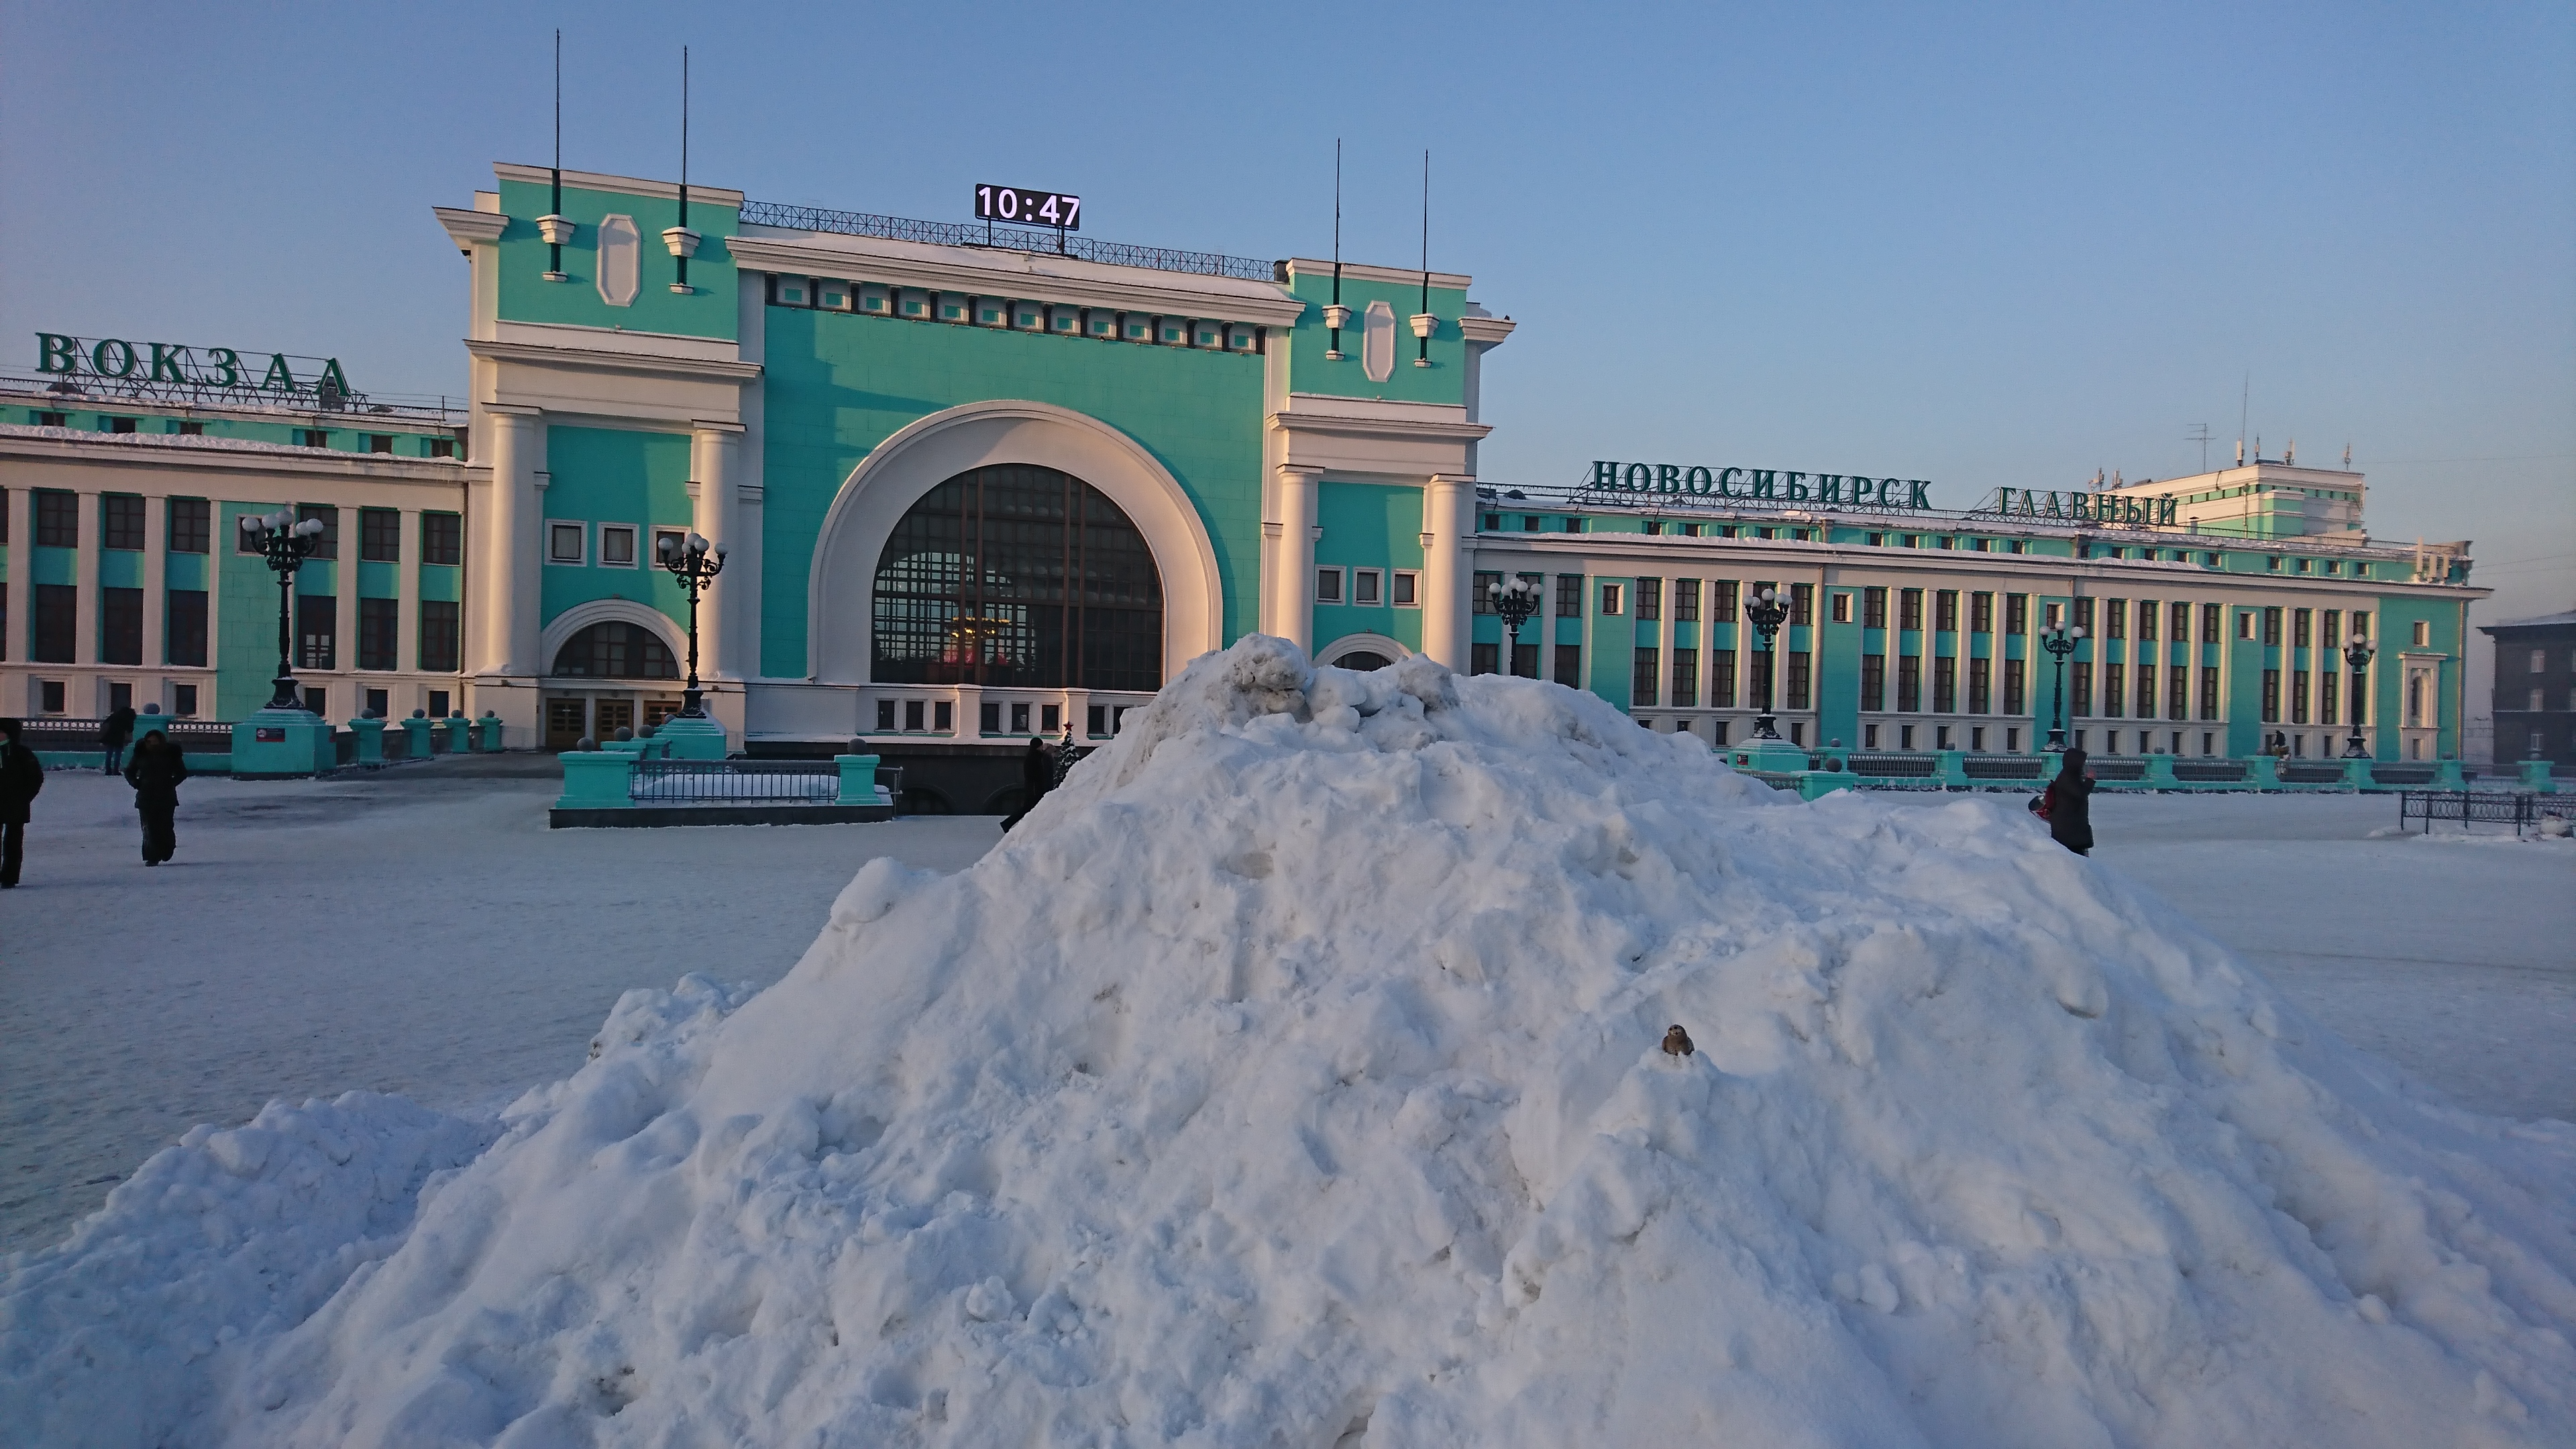 Novosibirsk the Capital of Siberia